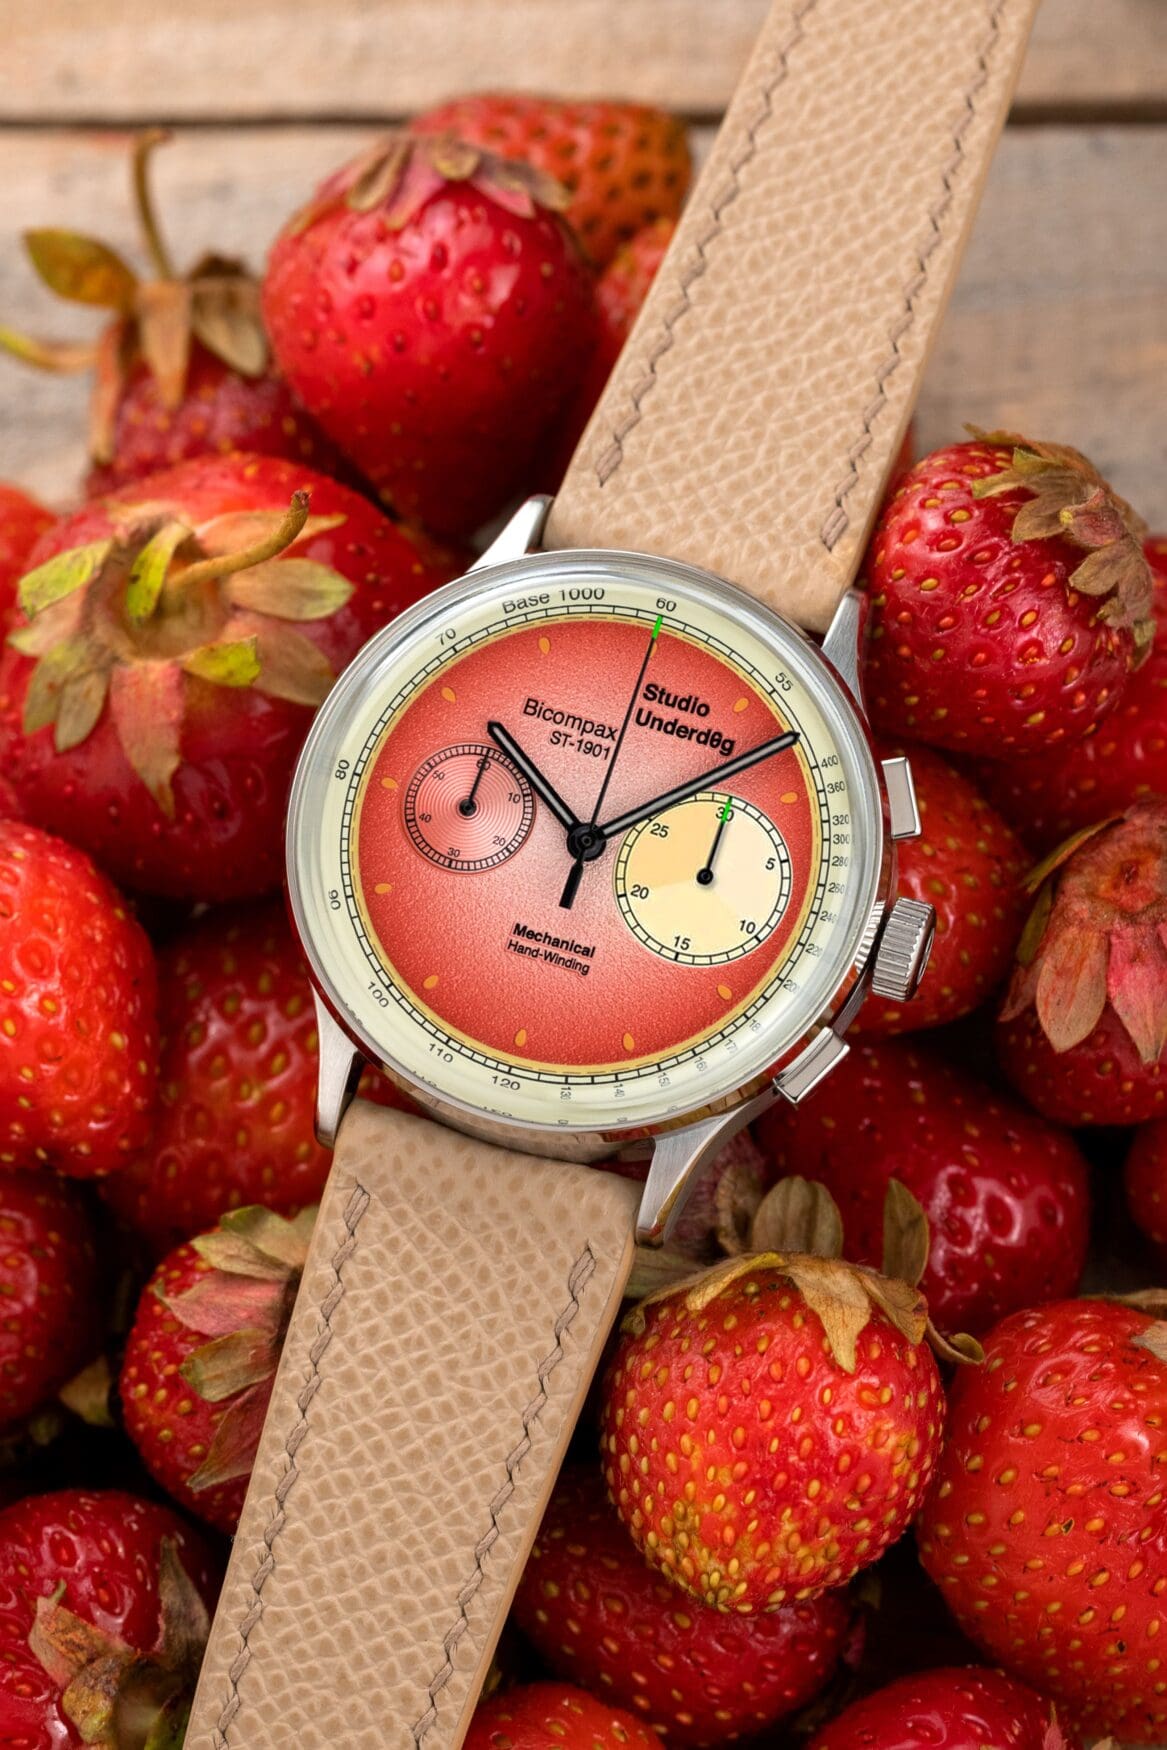 Studio Underd0g unveils Strawberries & Cream Chronograph inspired by Wimbledon snack